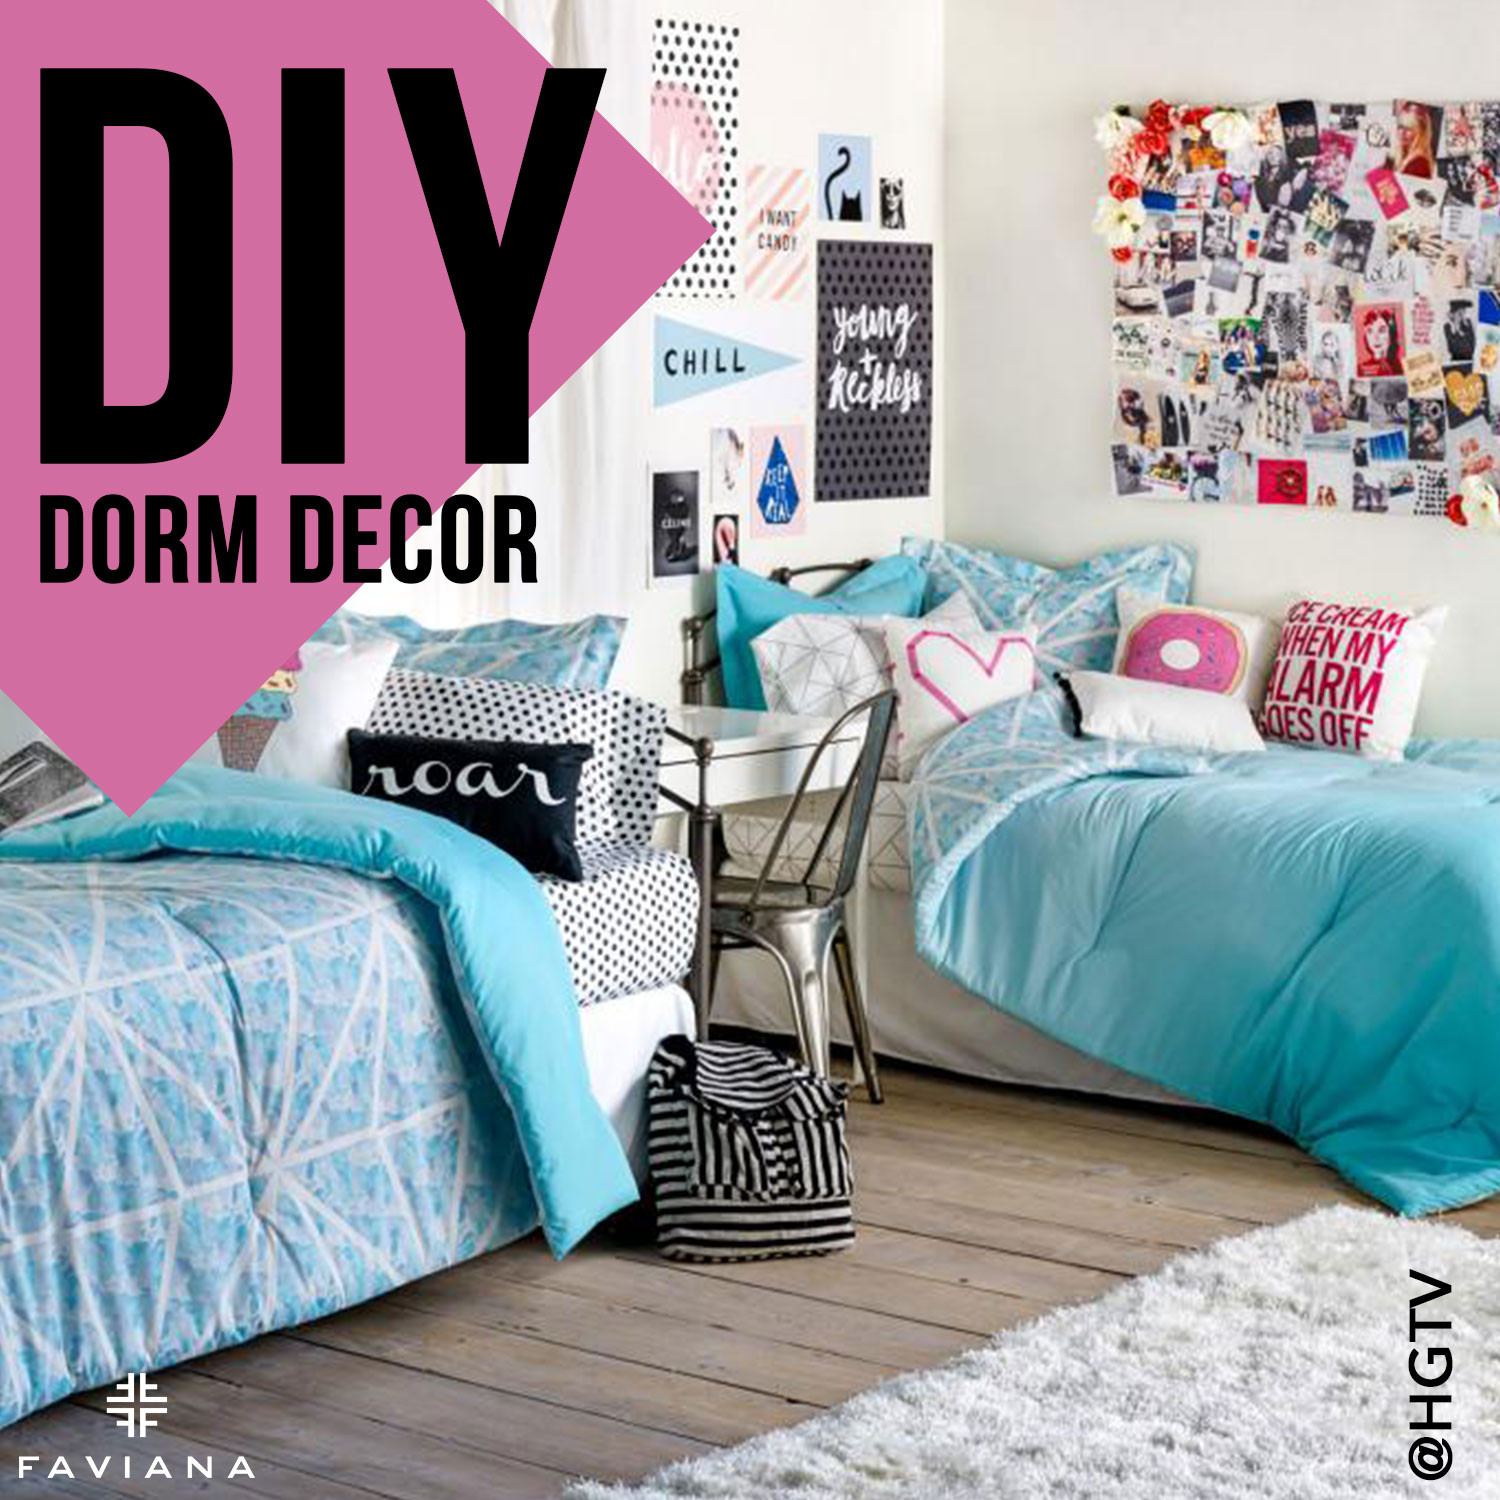 Best ideas about DIY Dorm Rooms
. Save or Pin DIY Dorm Decor Now.